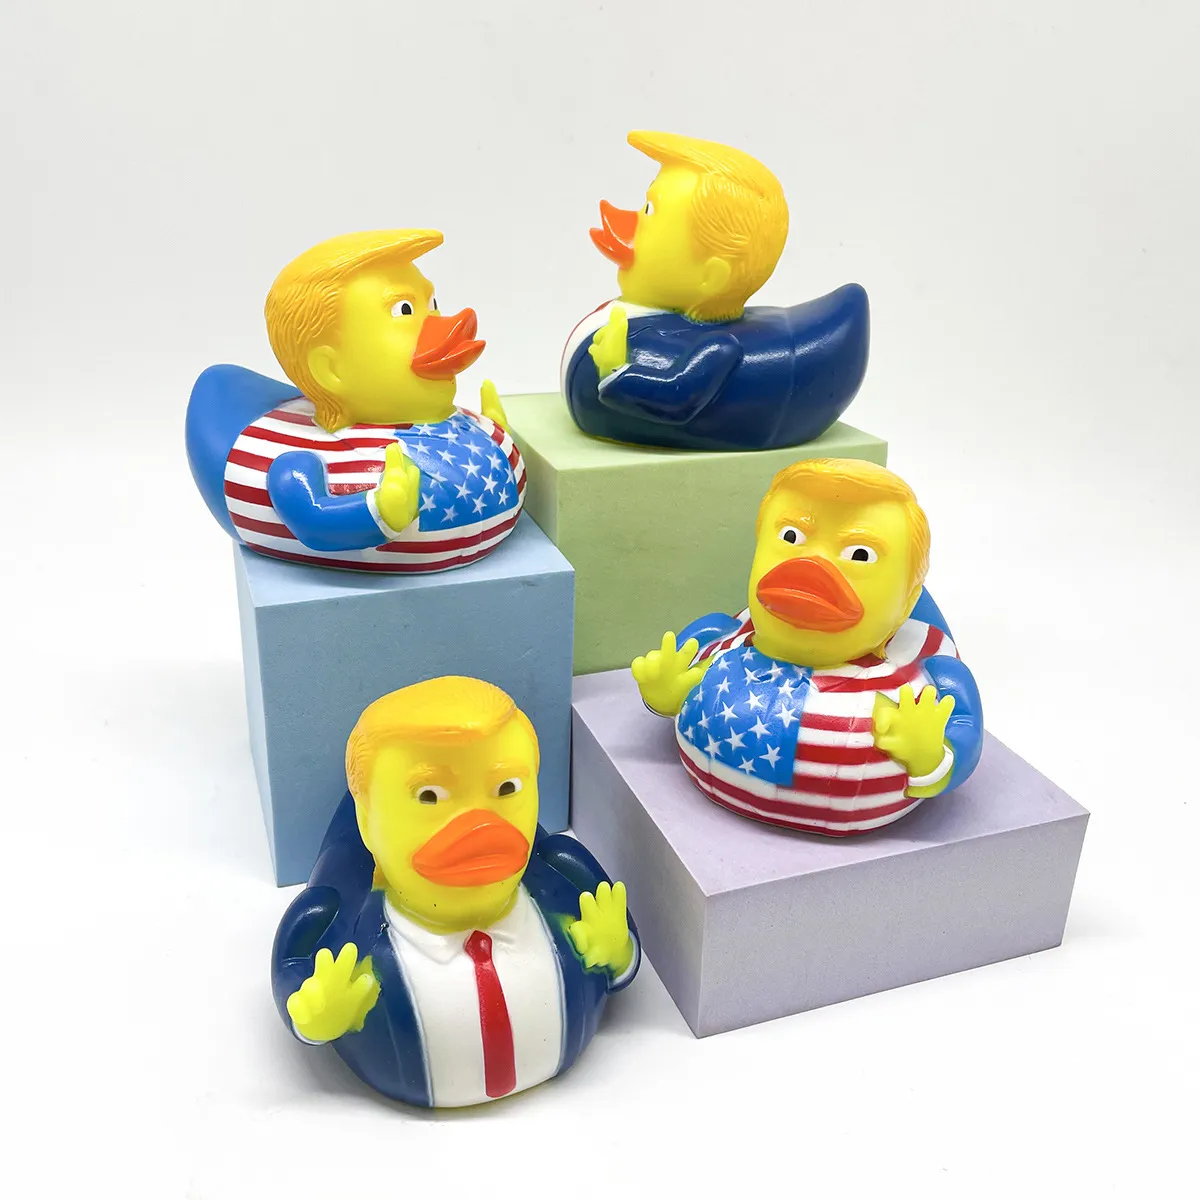 Nouveau Creative Pvc Trump Ducks Bath Floating Water Toy Party Fournions drôles Toys Gift